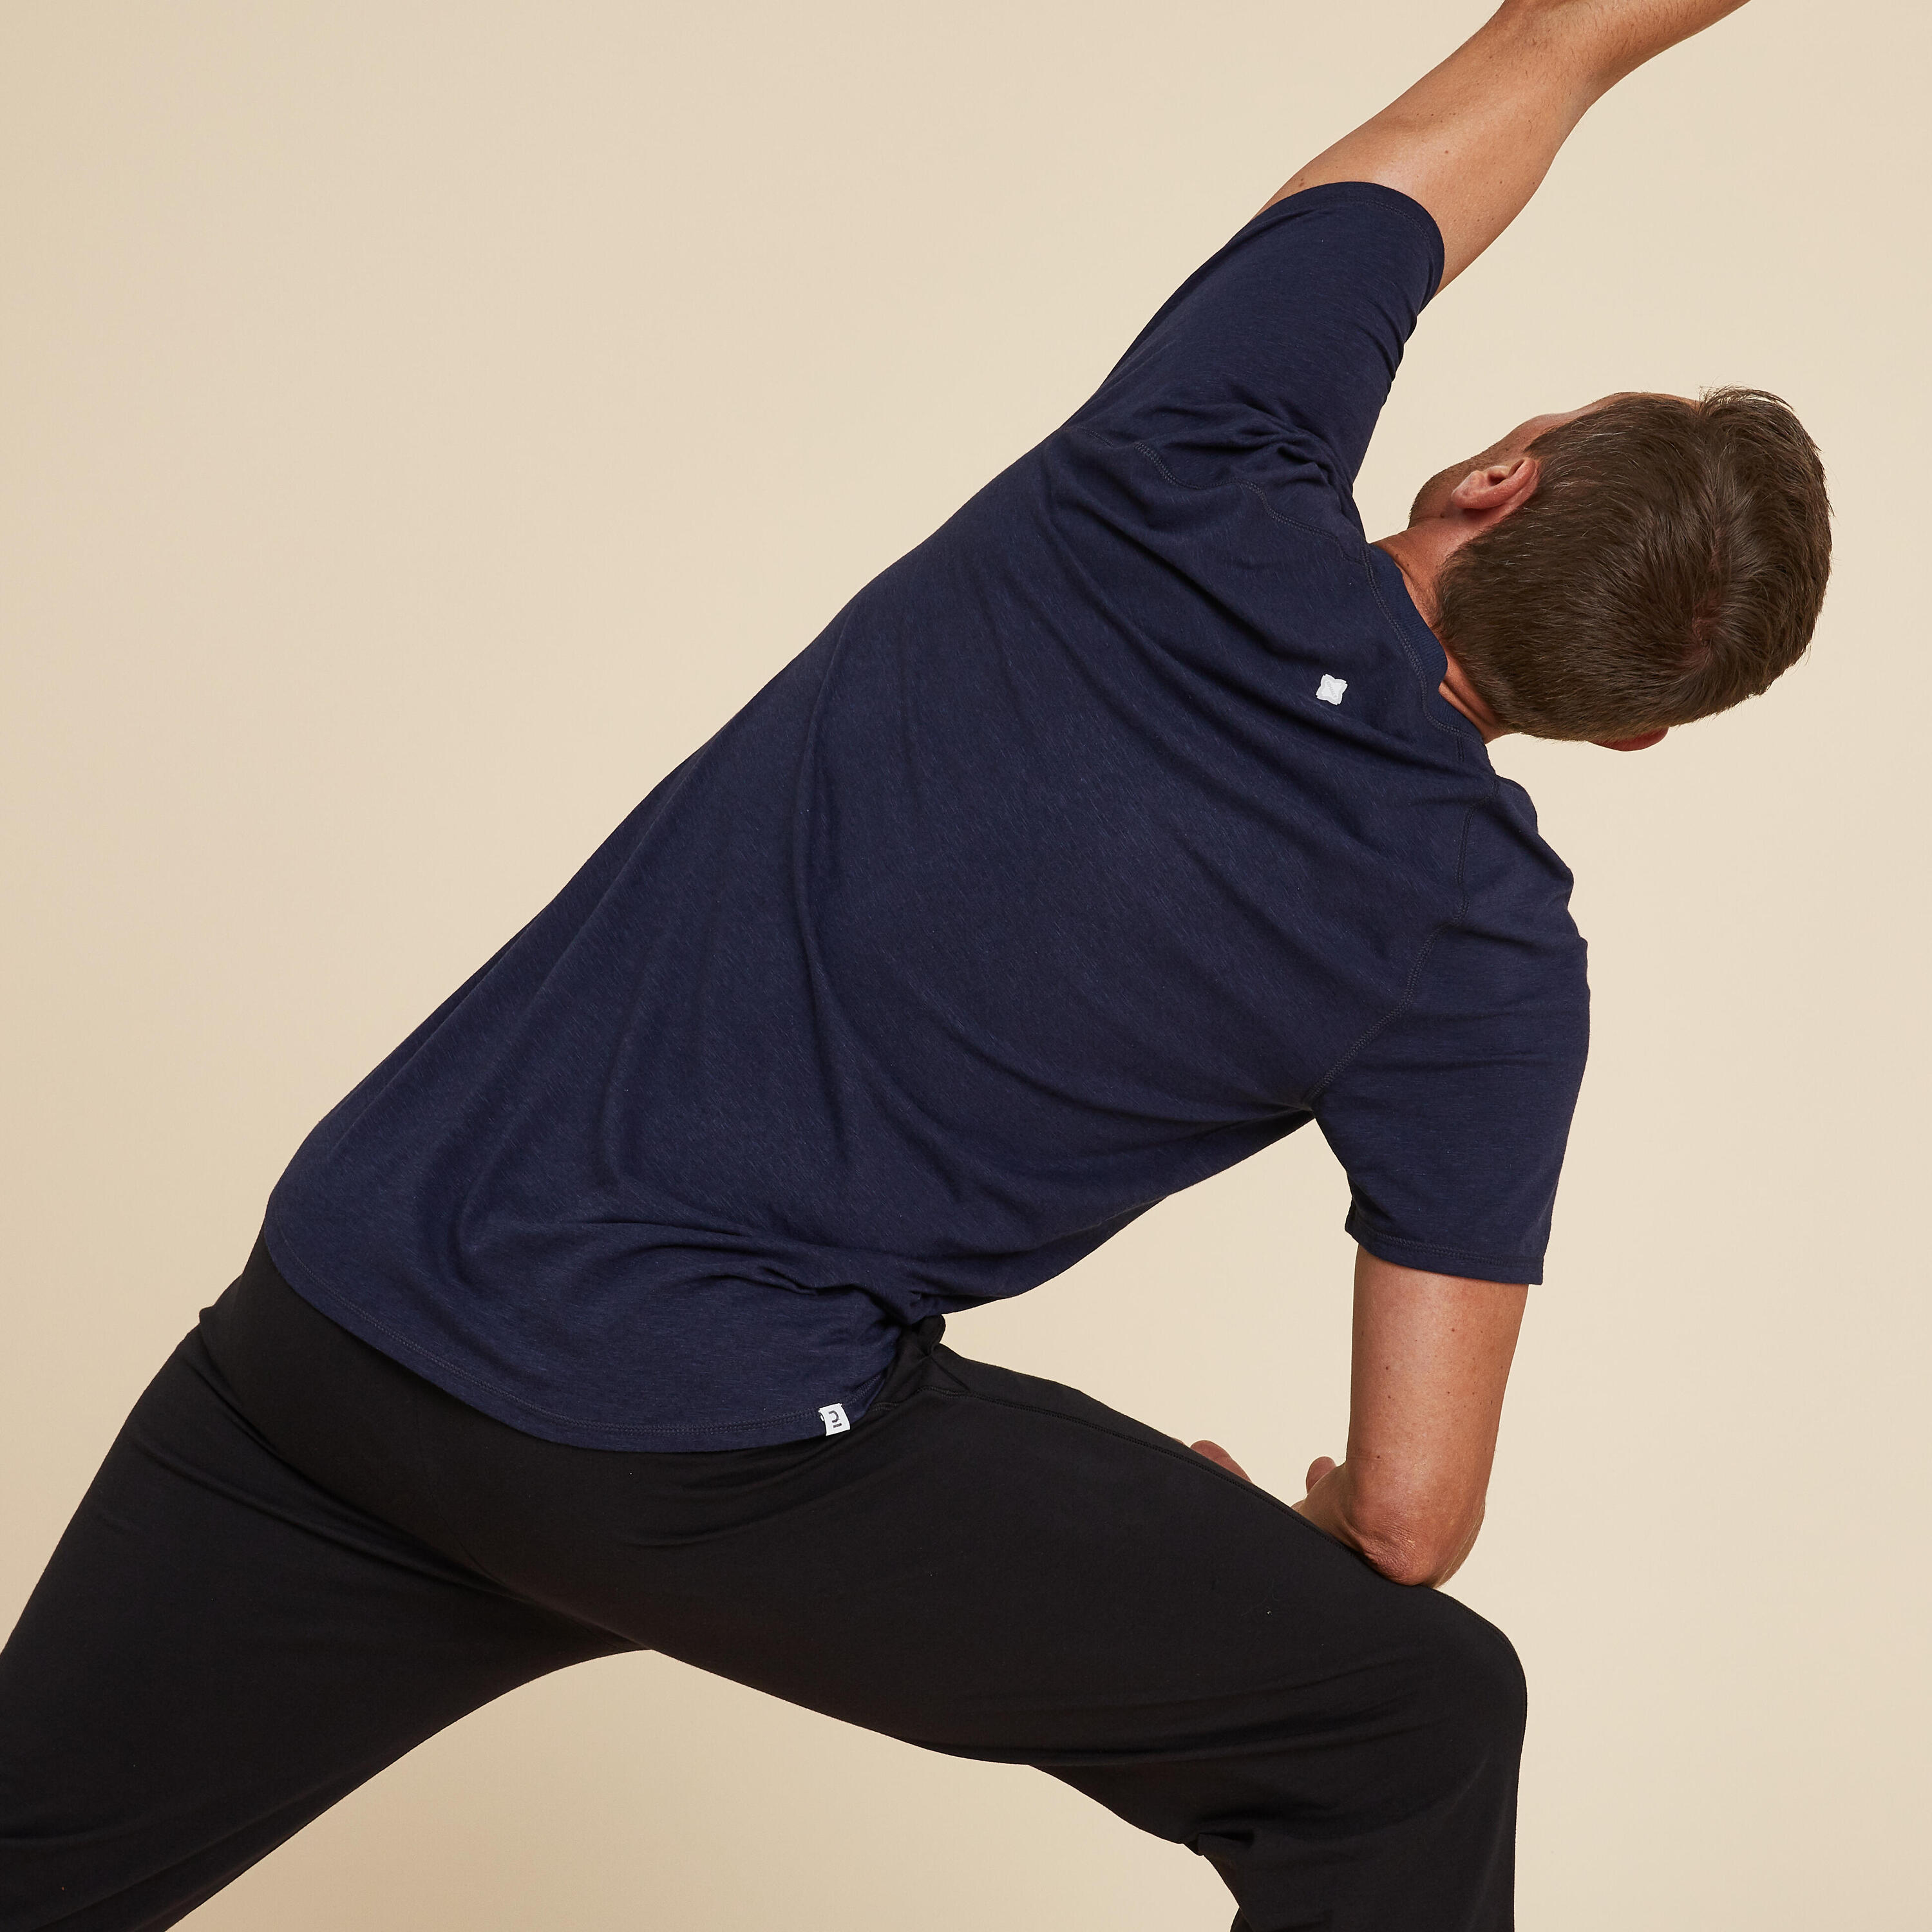 Men's Short-Sleeved Gentle Yoga T-Shirt - Navy Blue 4/4